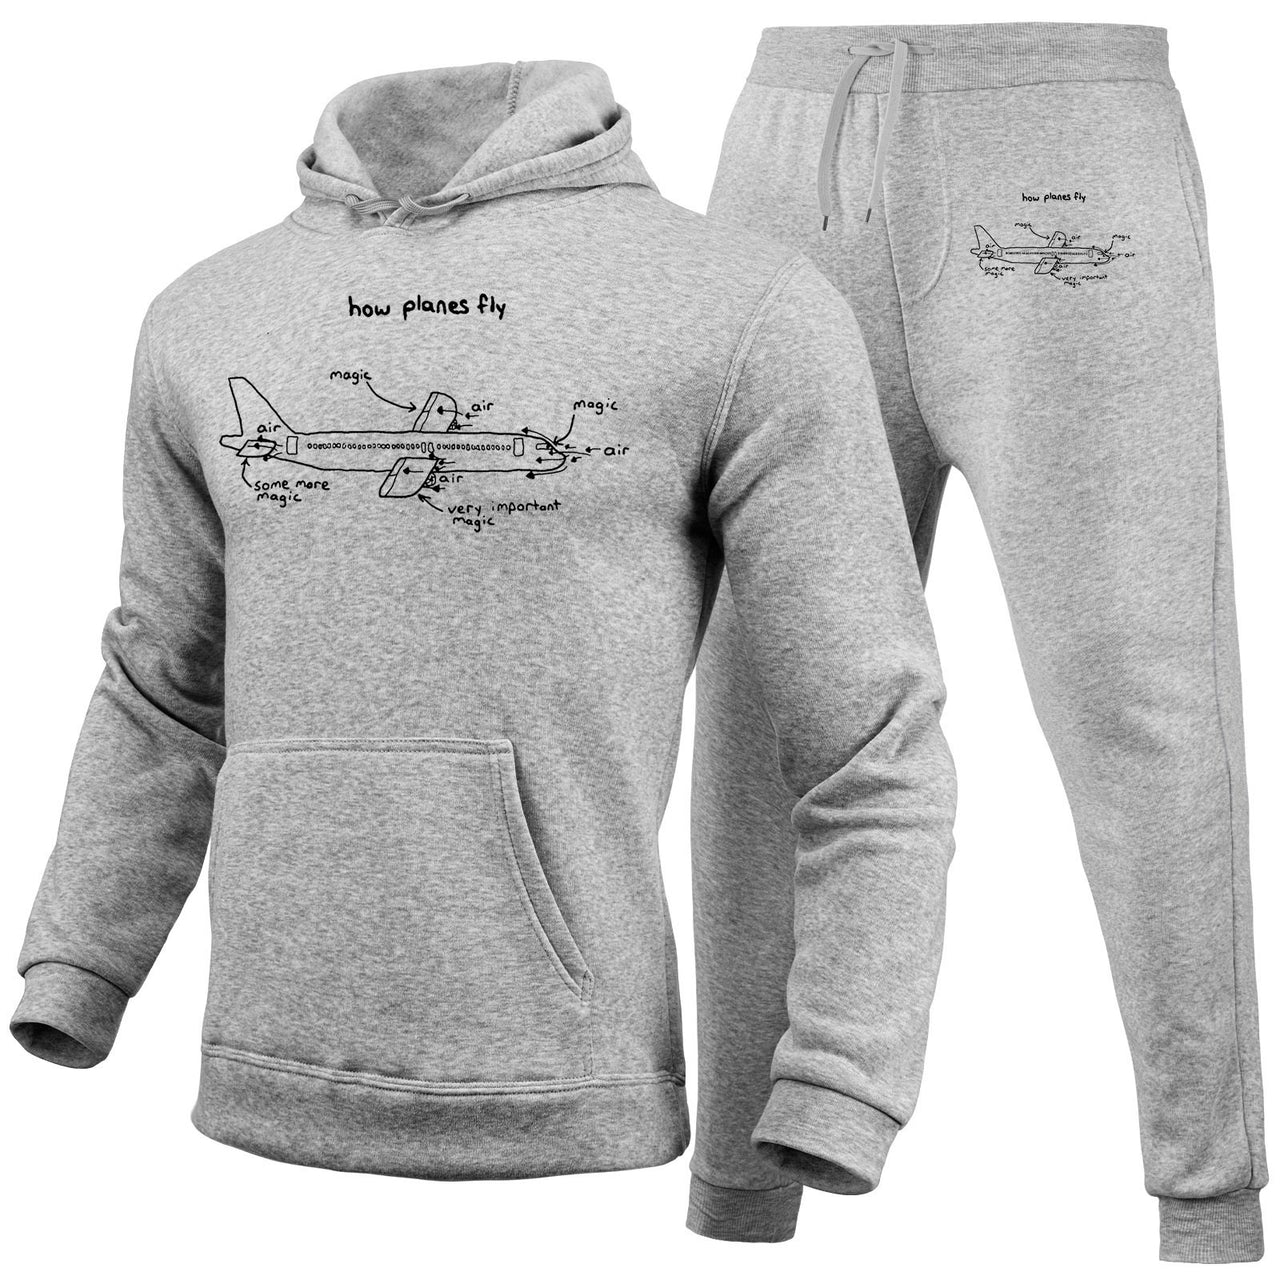 How Planes Fly Designed Hoodies & Sweatpants Set